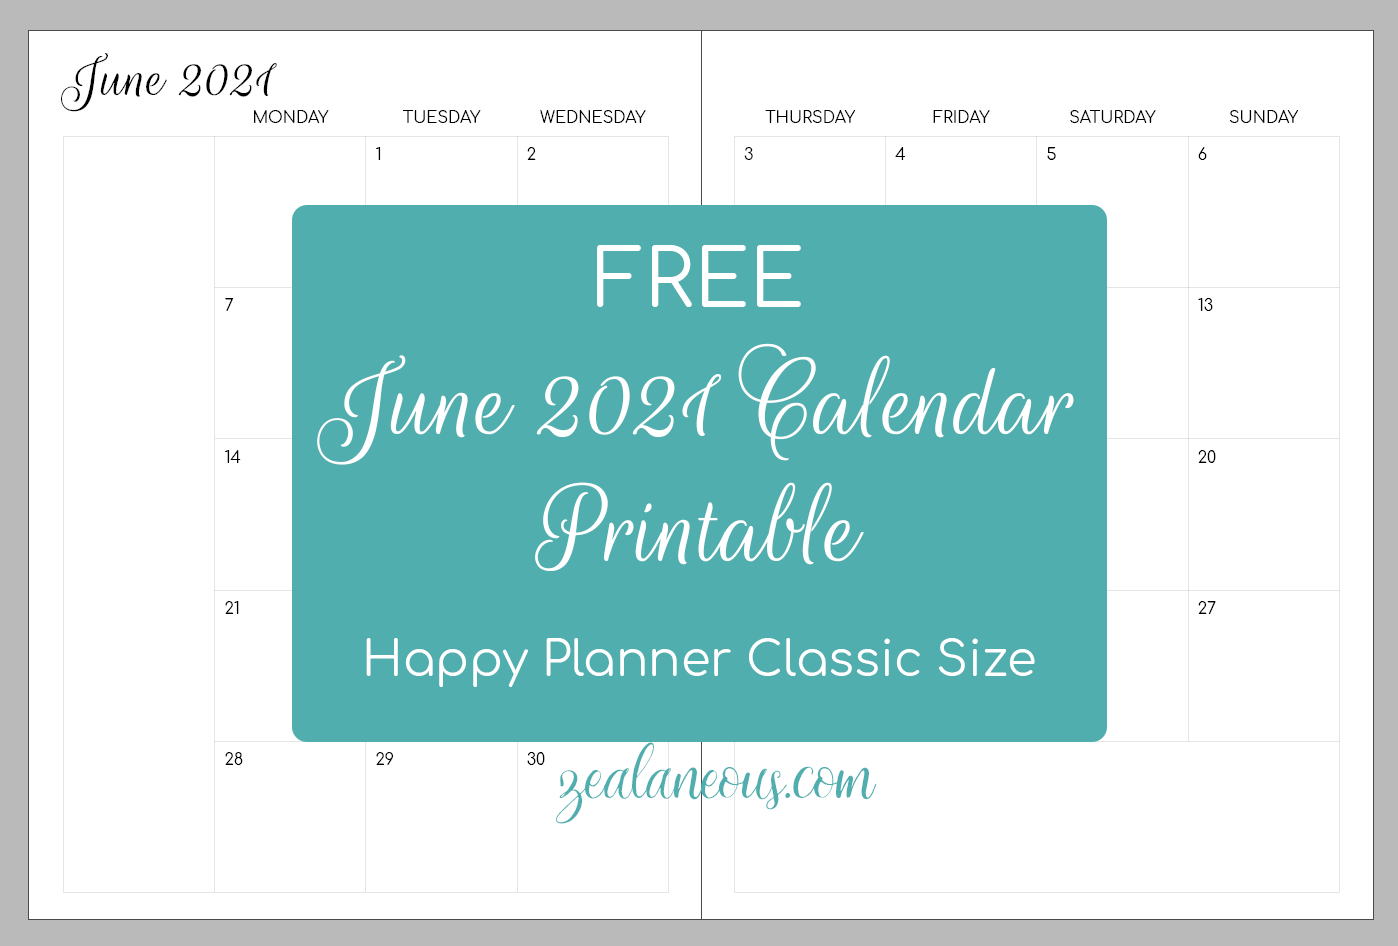 Free June 2021 Printable Calendar for Happy Planner Classic